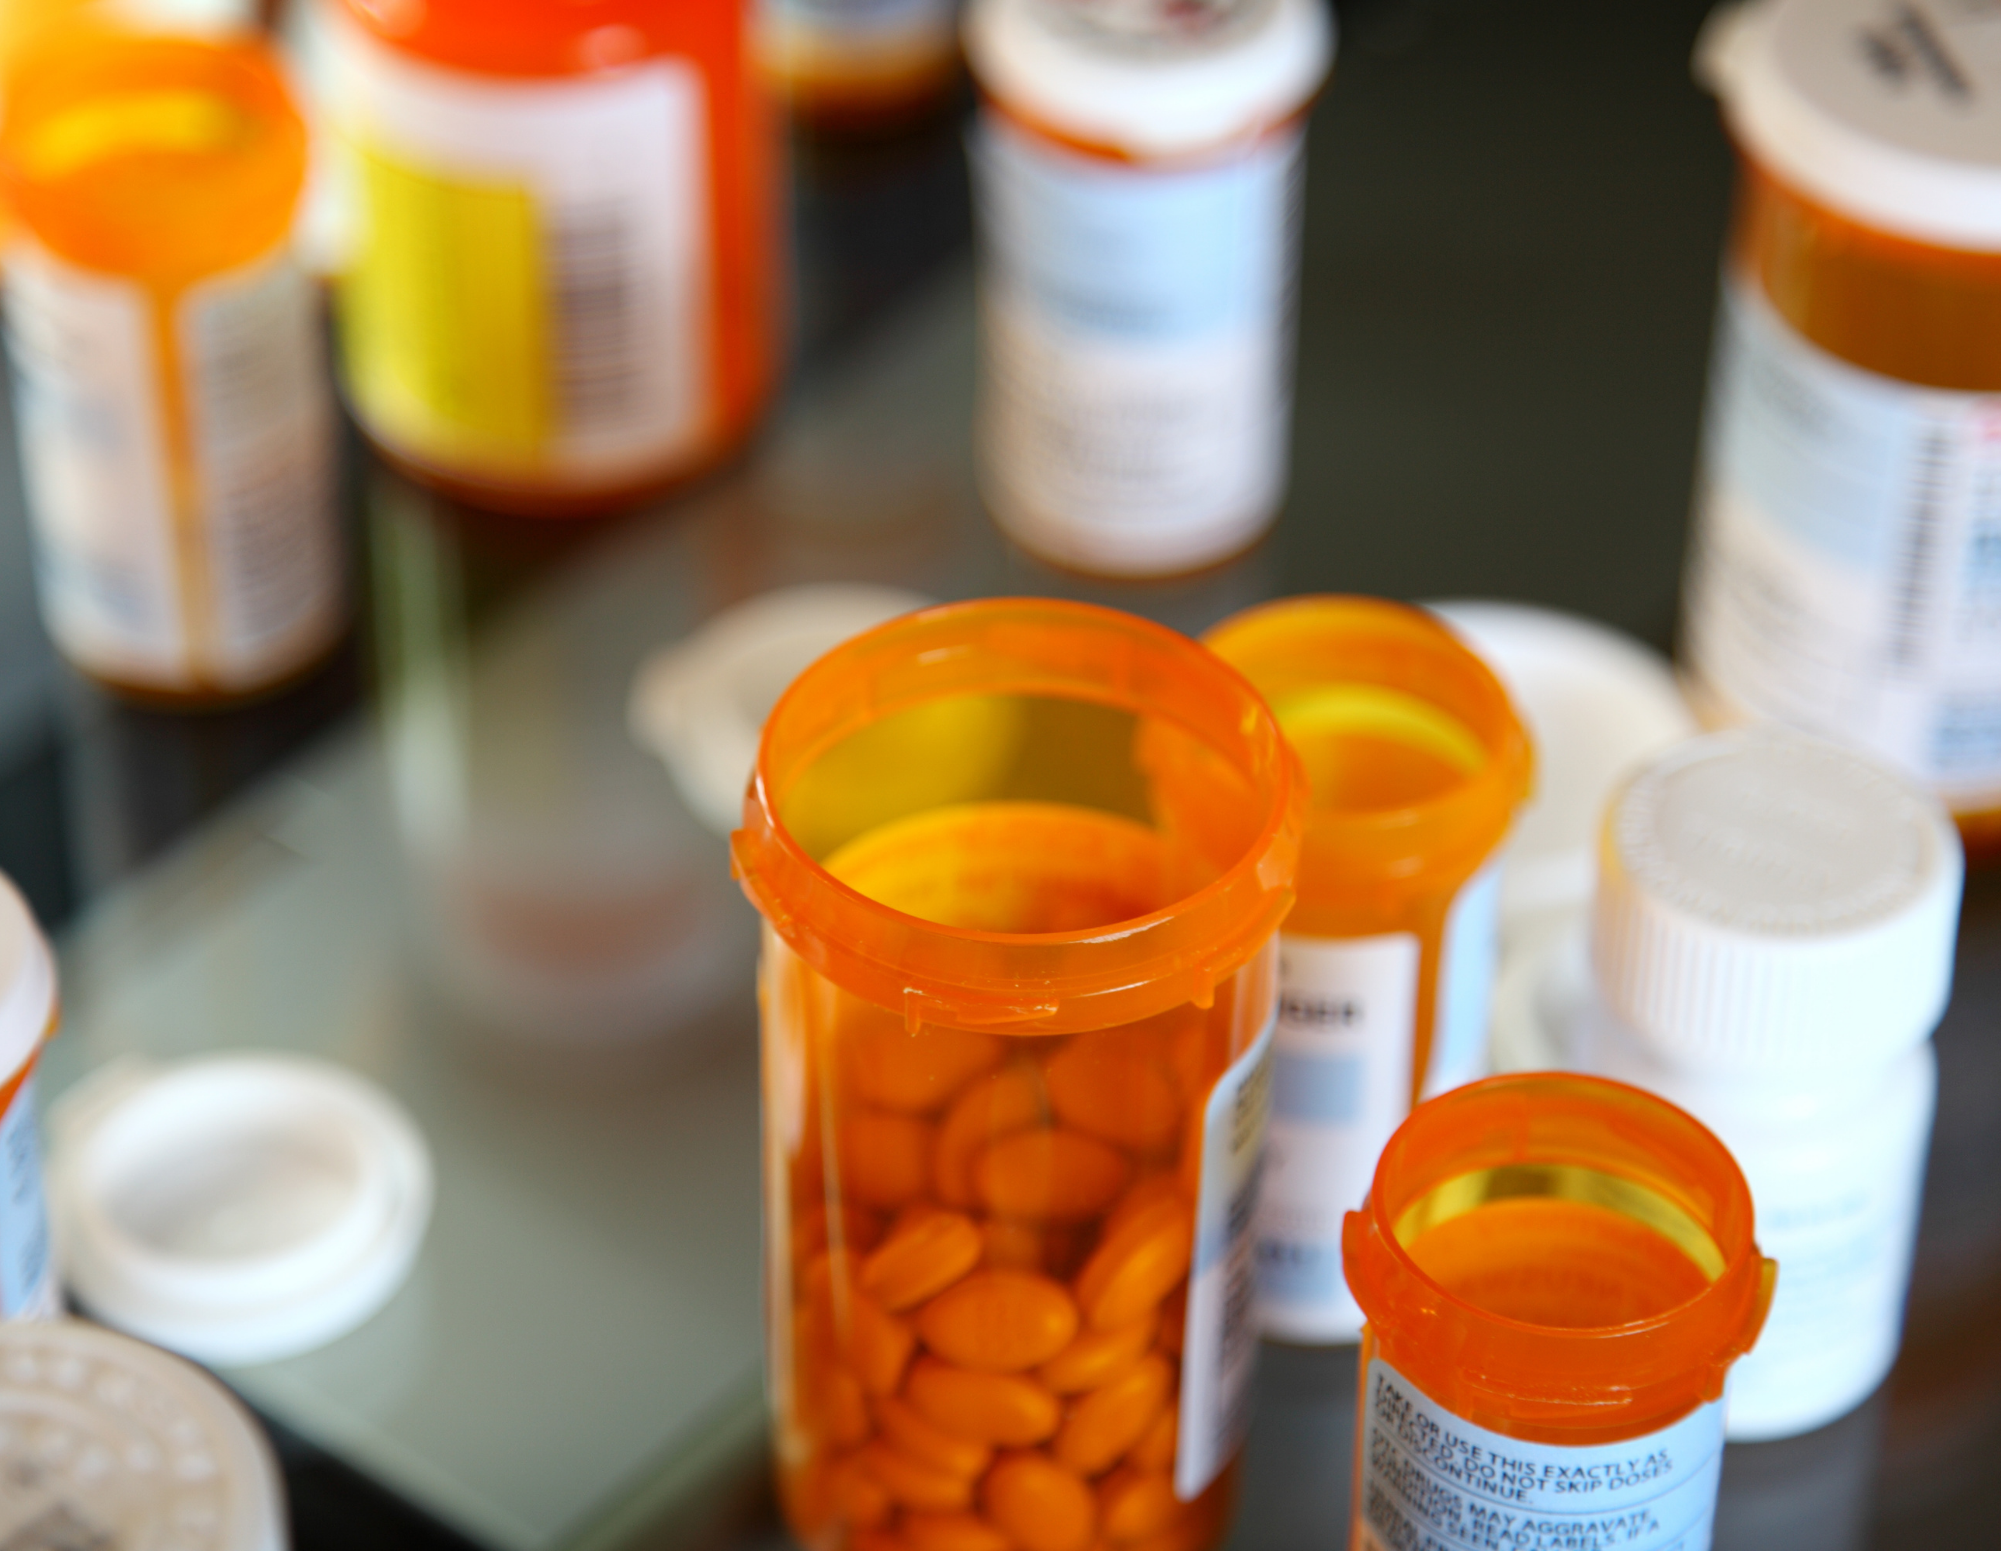 Part D 101: Three charts show how the program provides comprehensive prescription drug coverage